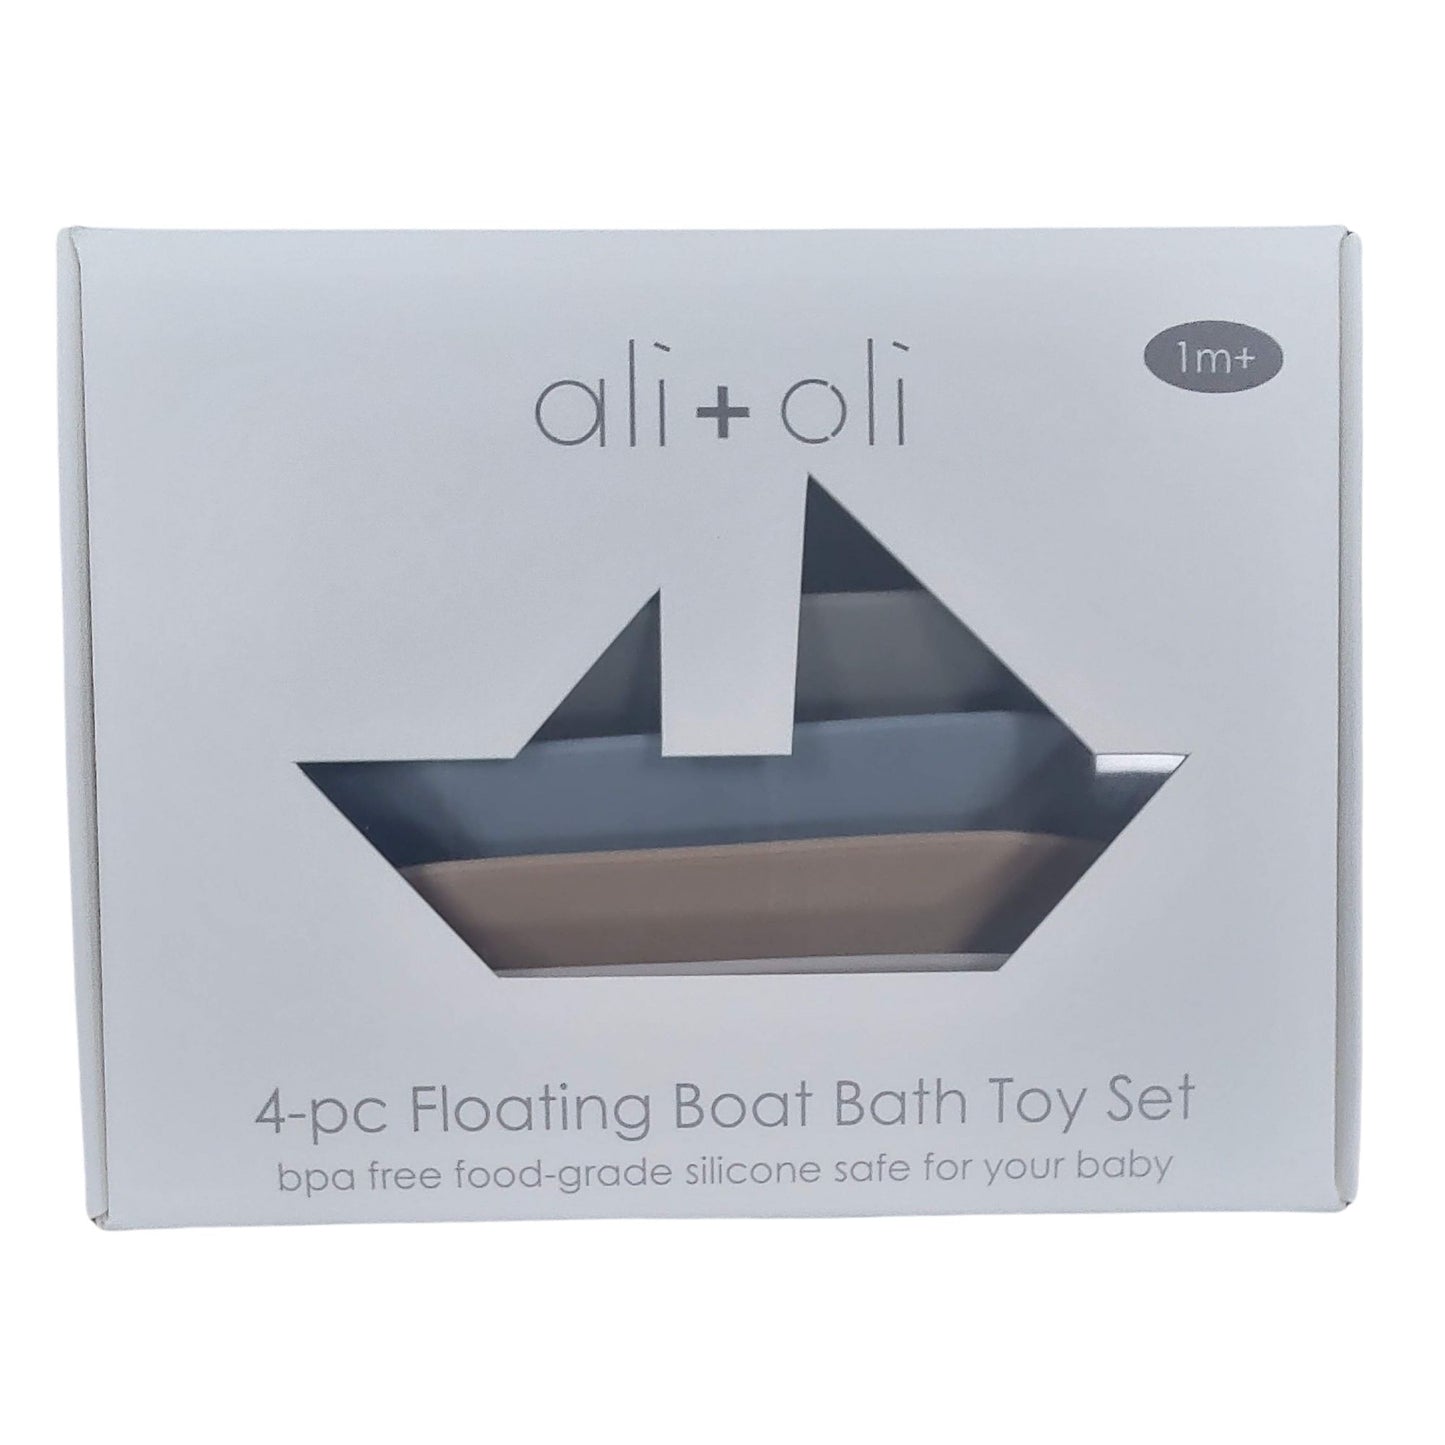 Mini Floating Boat Bath Toy Set 4-pc Soft Food Grade Silicone